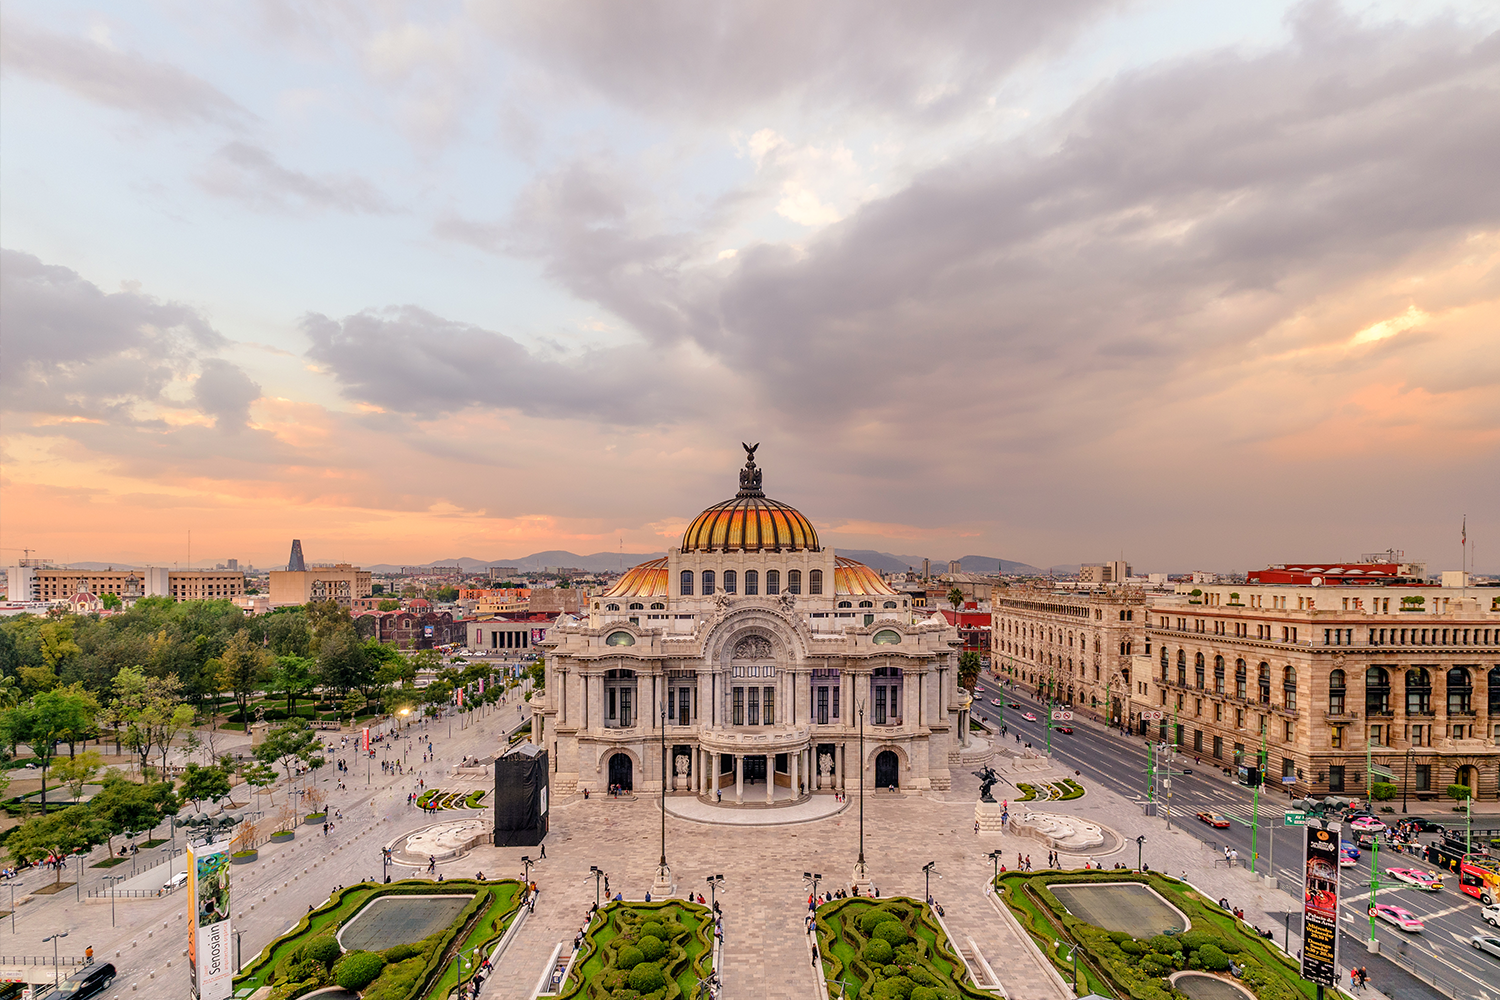 Palacio de Bellas Artes, a prominent cultural center in Mexico City